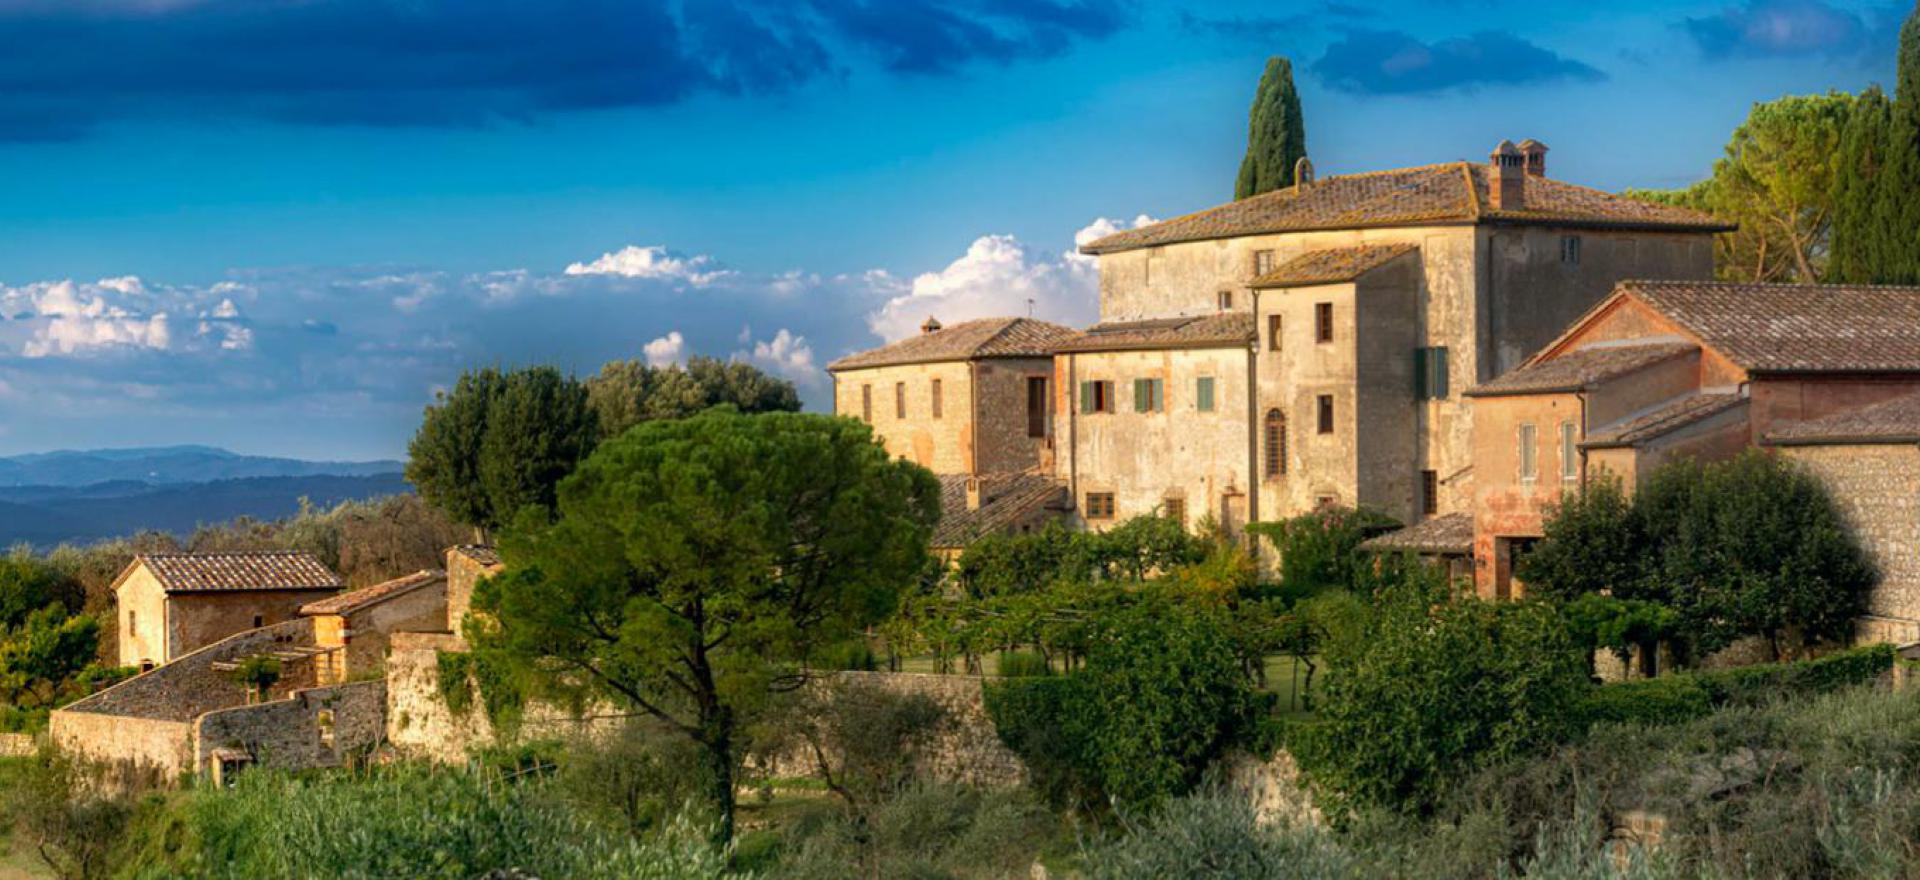 Agriturismo Tuscany Hidden gem in Tuscany near Siena